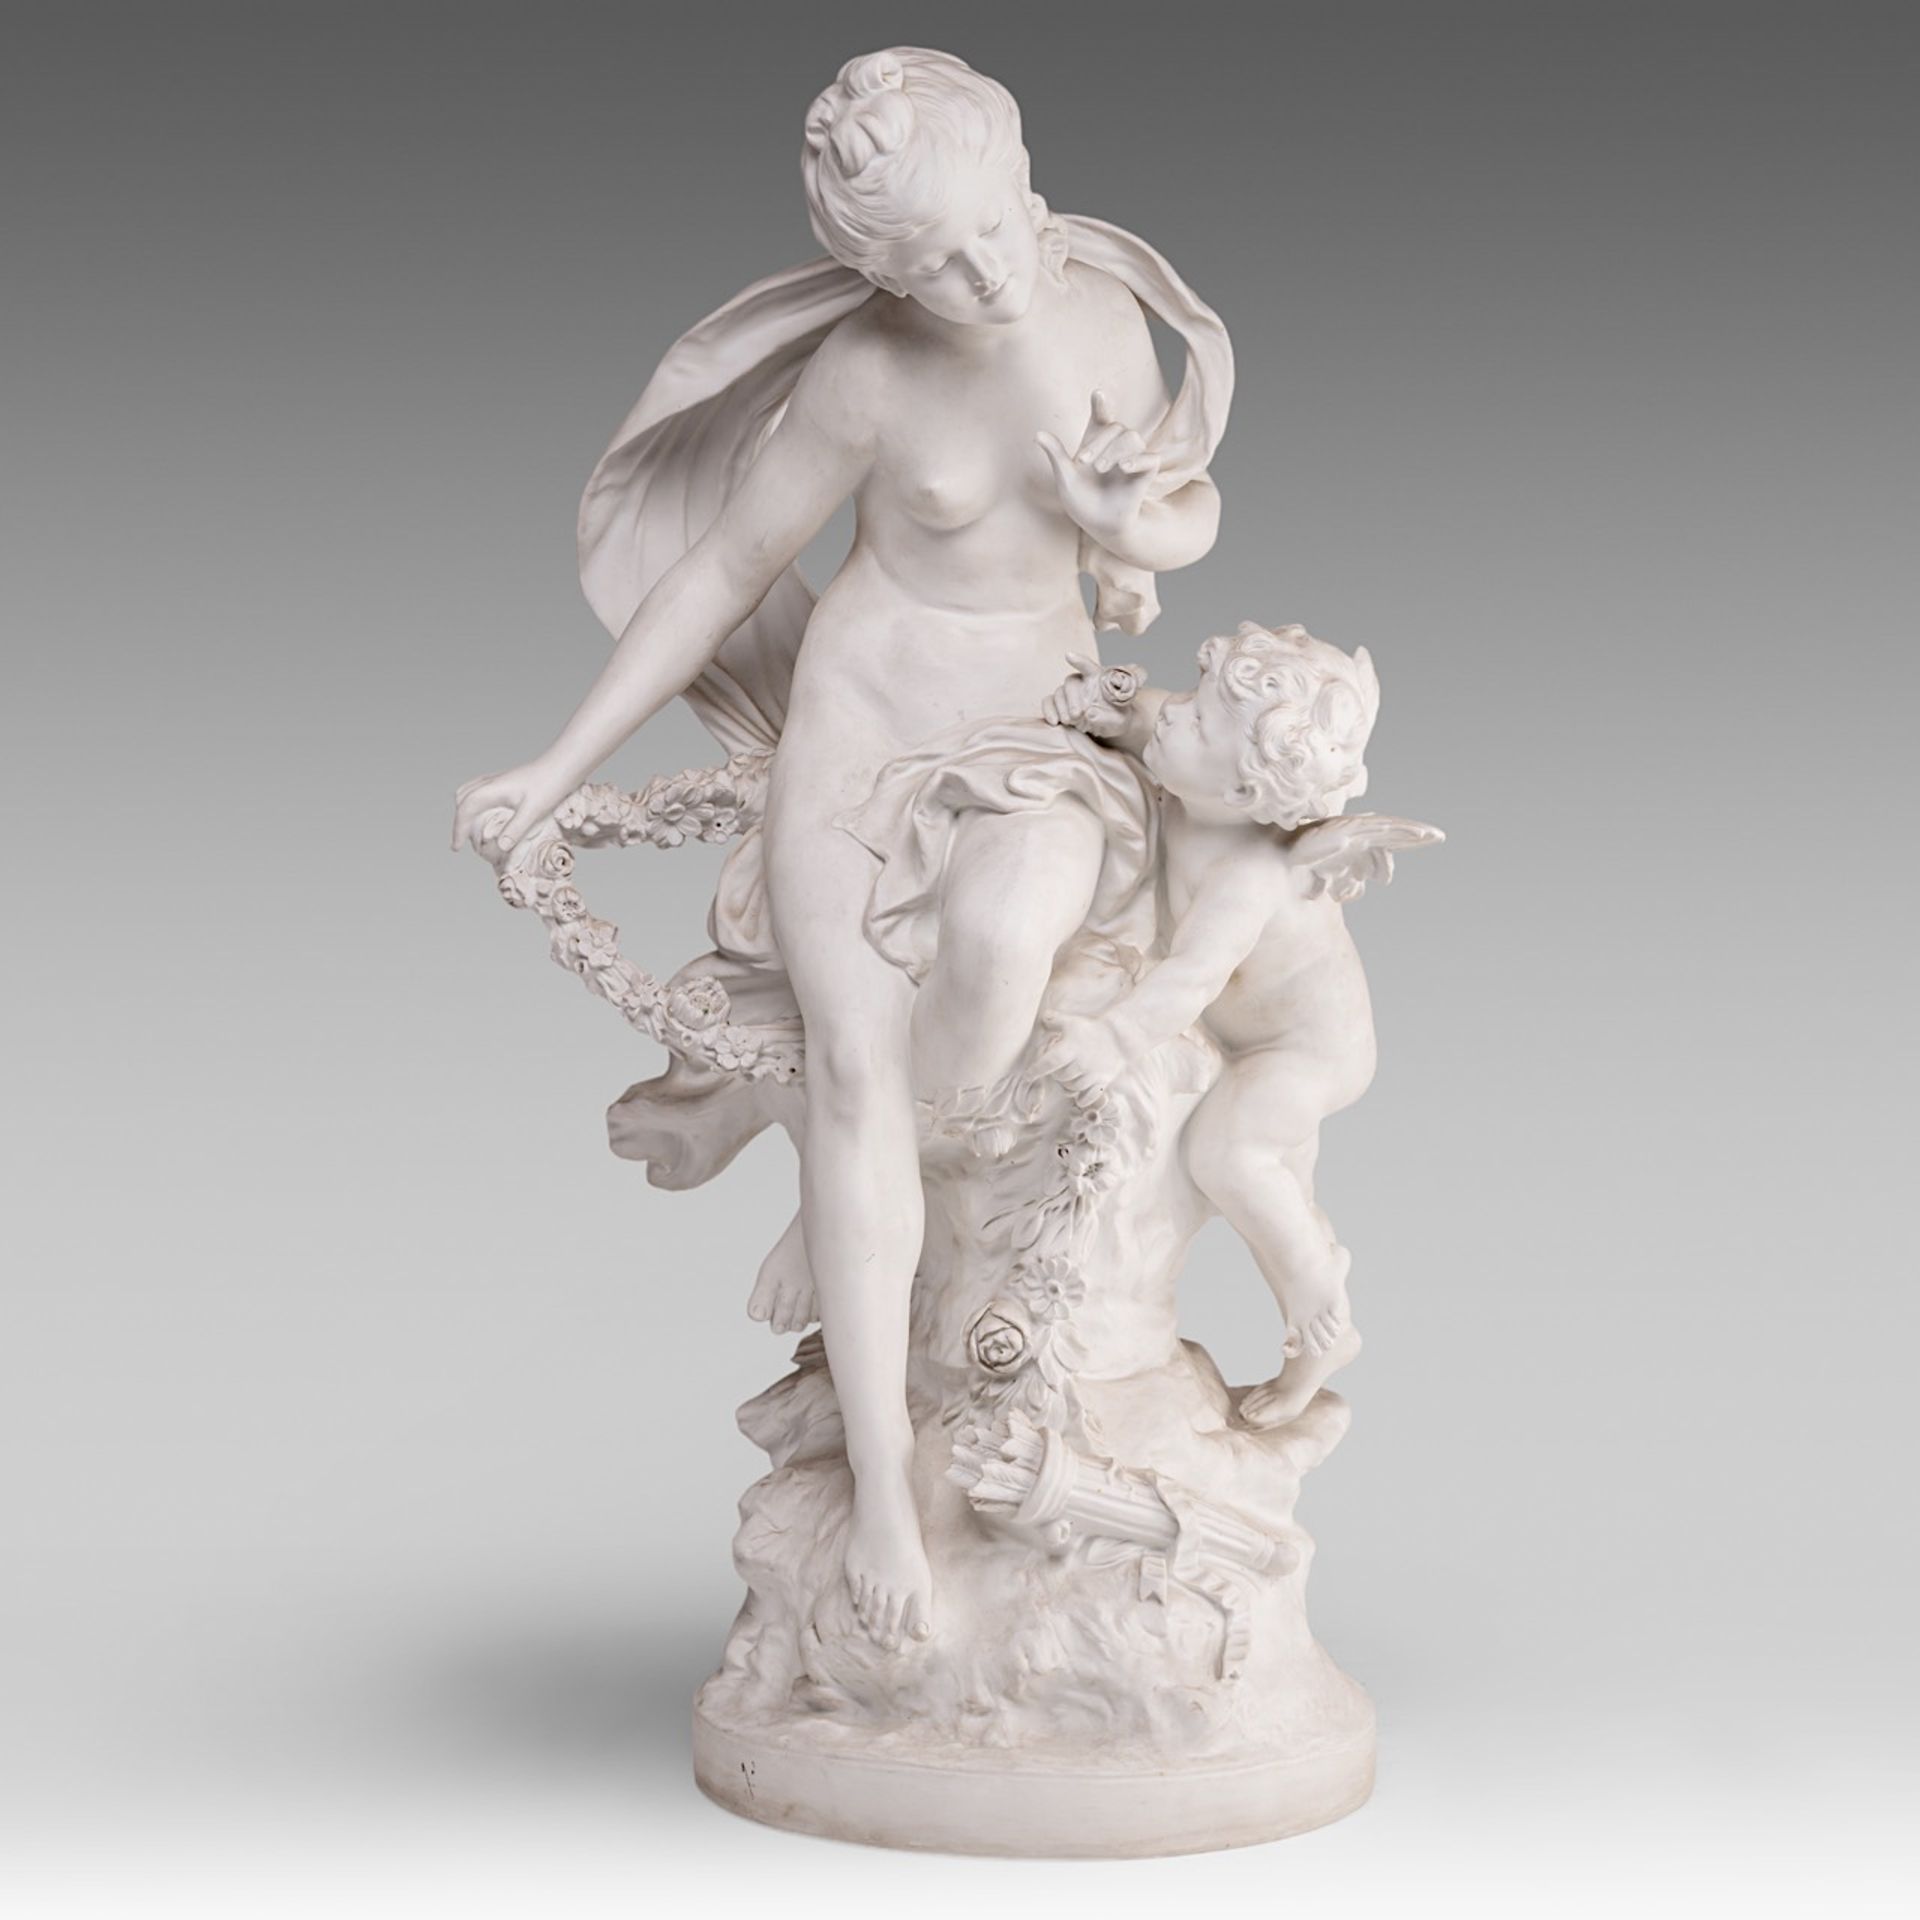 Auguste Moreau (1834-1917), biscuit sculpture of Venus and Amor, marked Sevres, H 64 cm